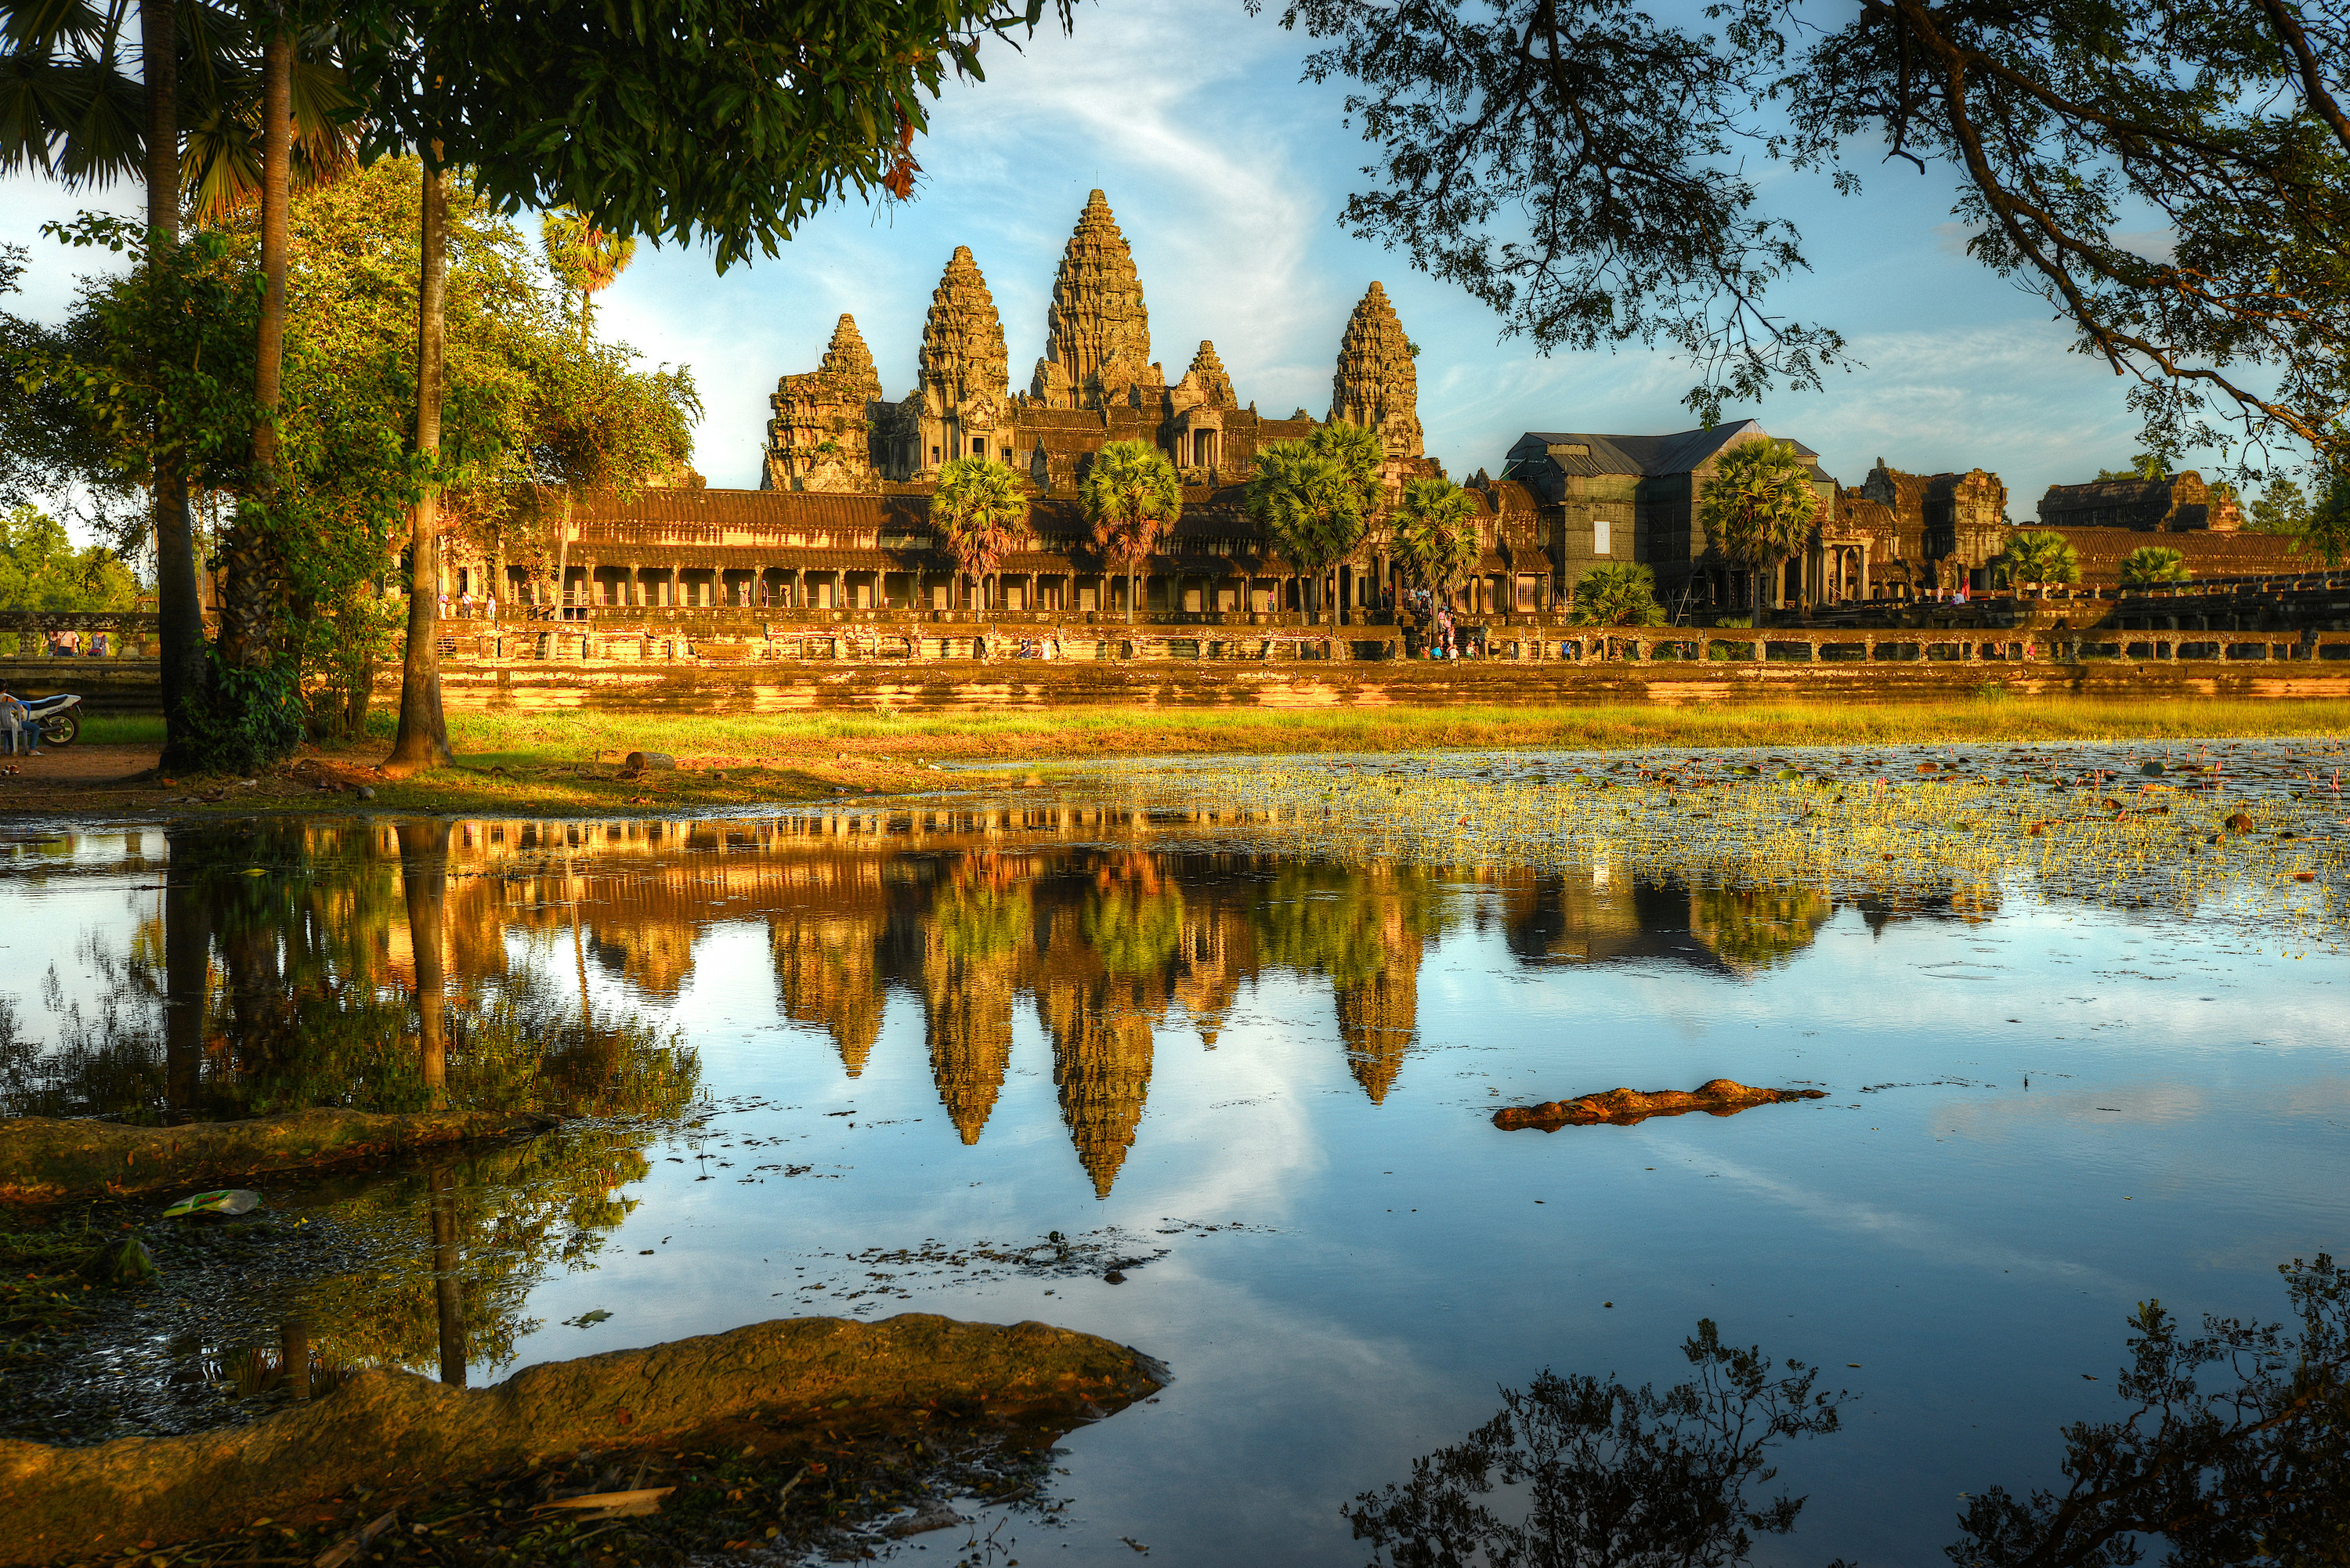 The exterior view of Angkor Wat.